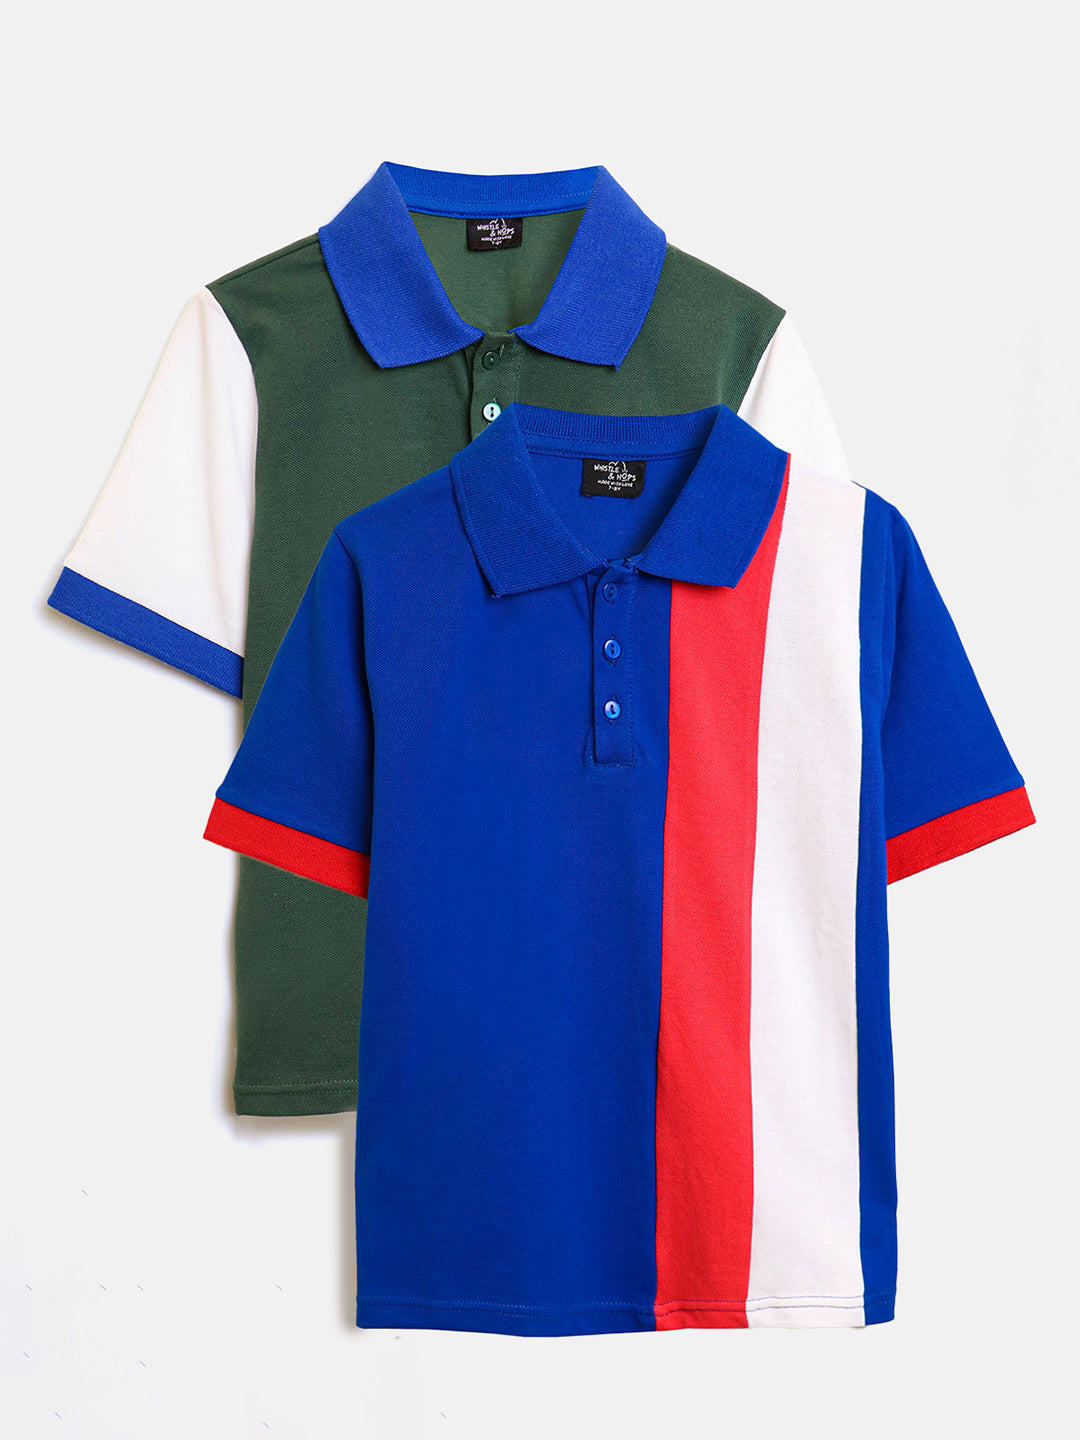 Colourblocked Polo T-shirts Combo- Blue and Green